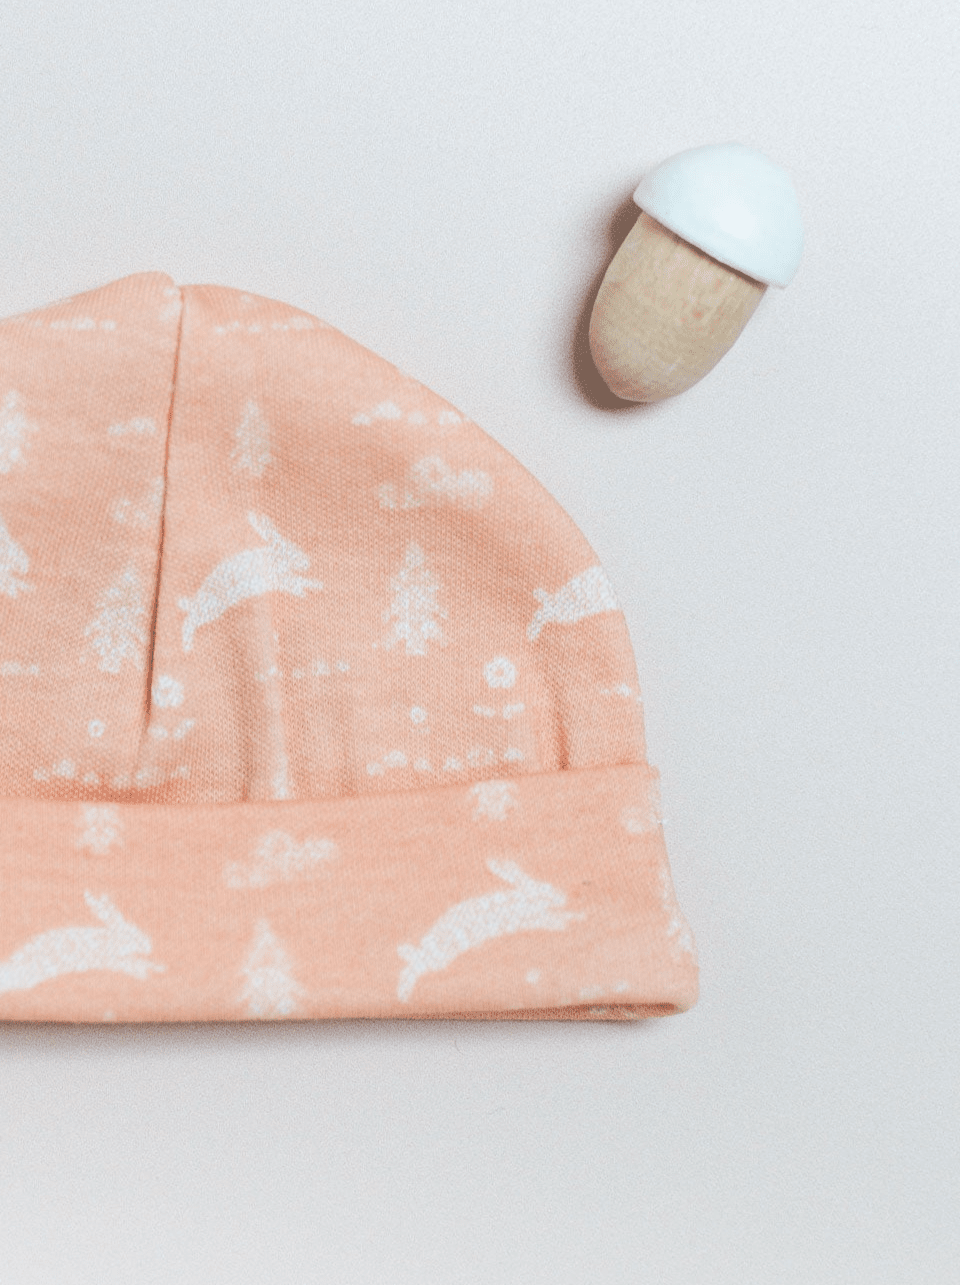 Preemie Round Hat, Leaping Bunnies, Premium 100% Organic Cotton Hat Tiny & Small 